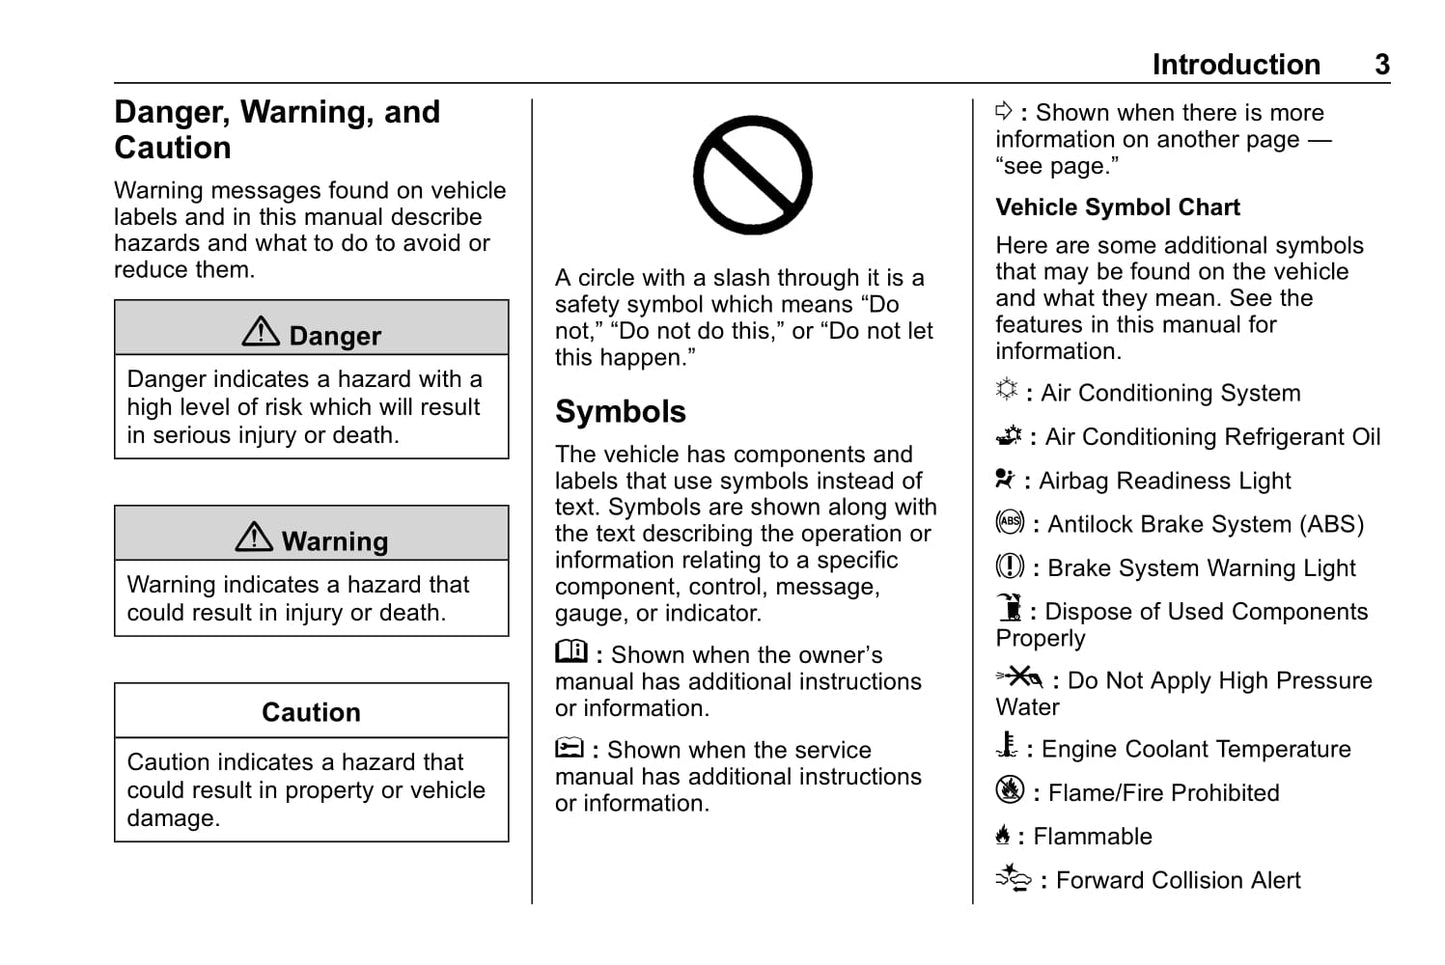 2020 Chevrolet Silverado Owner's Manual | English